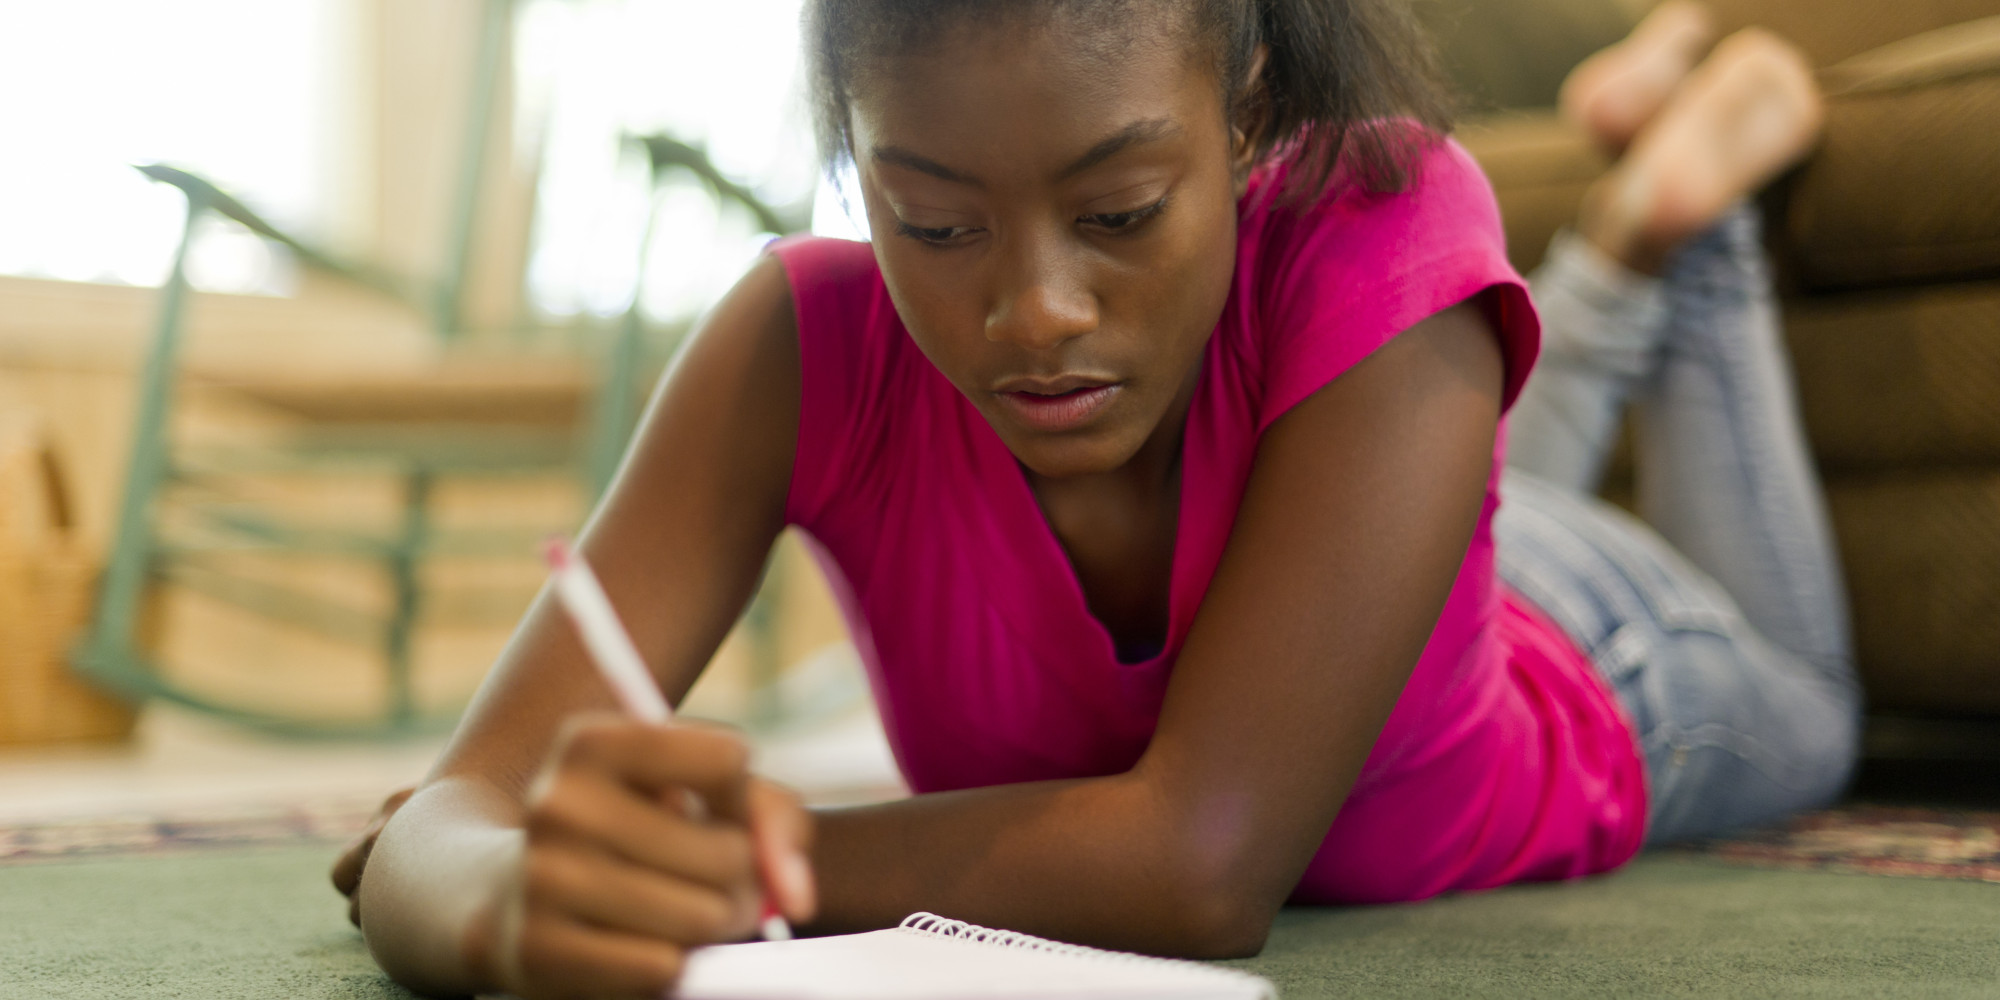 http://atlantablackstar.com/wp-content/uploads/2015/01/o-BLACK-TEEN-GIRL-WRITING-facebook1.jpg